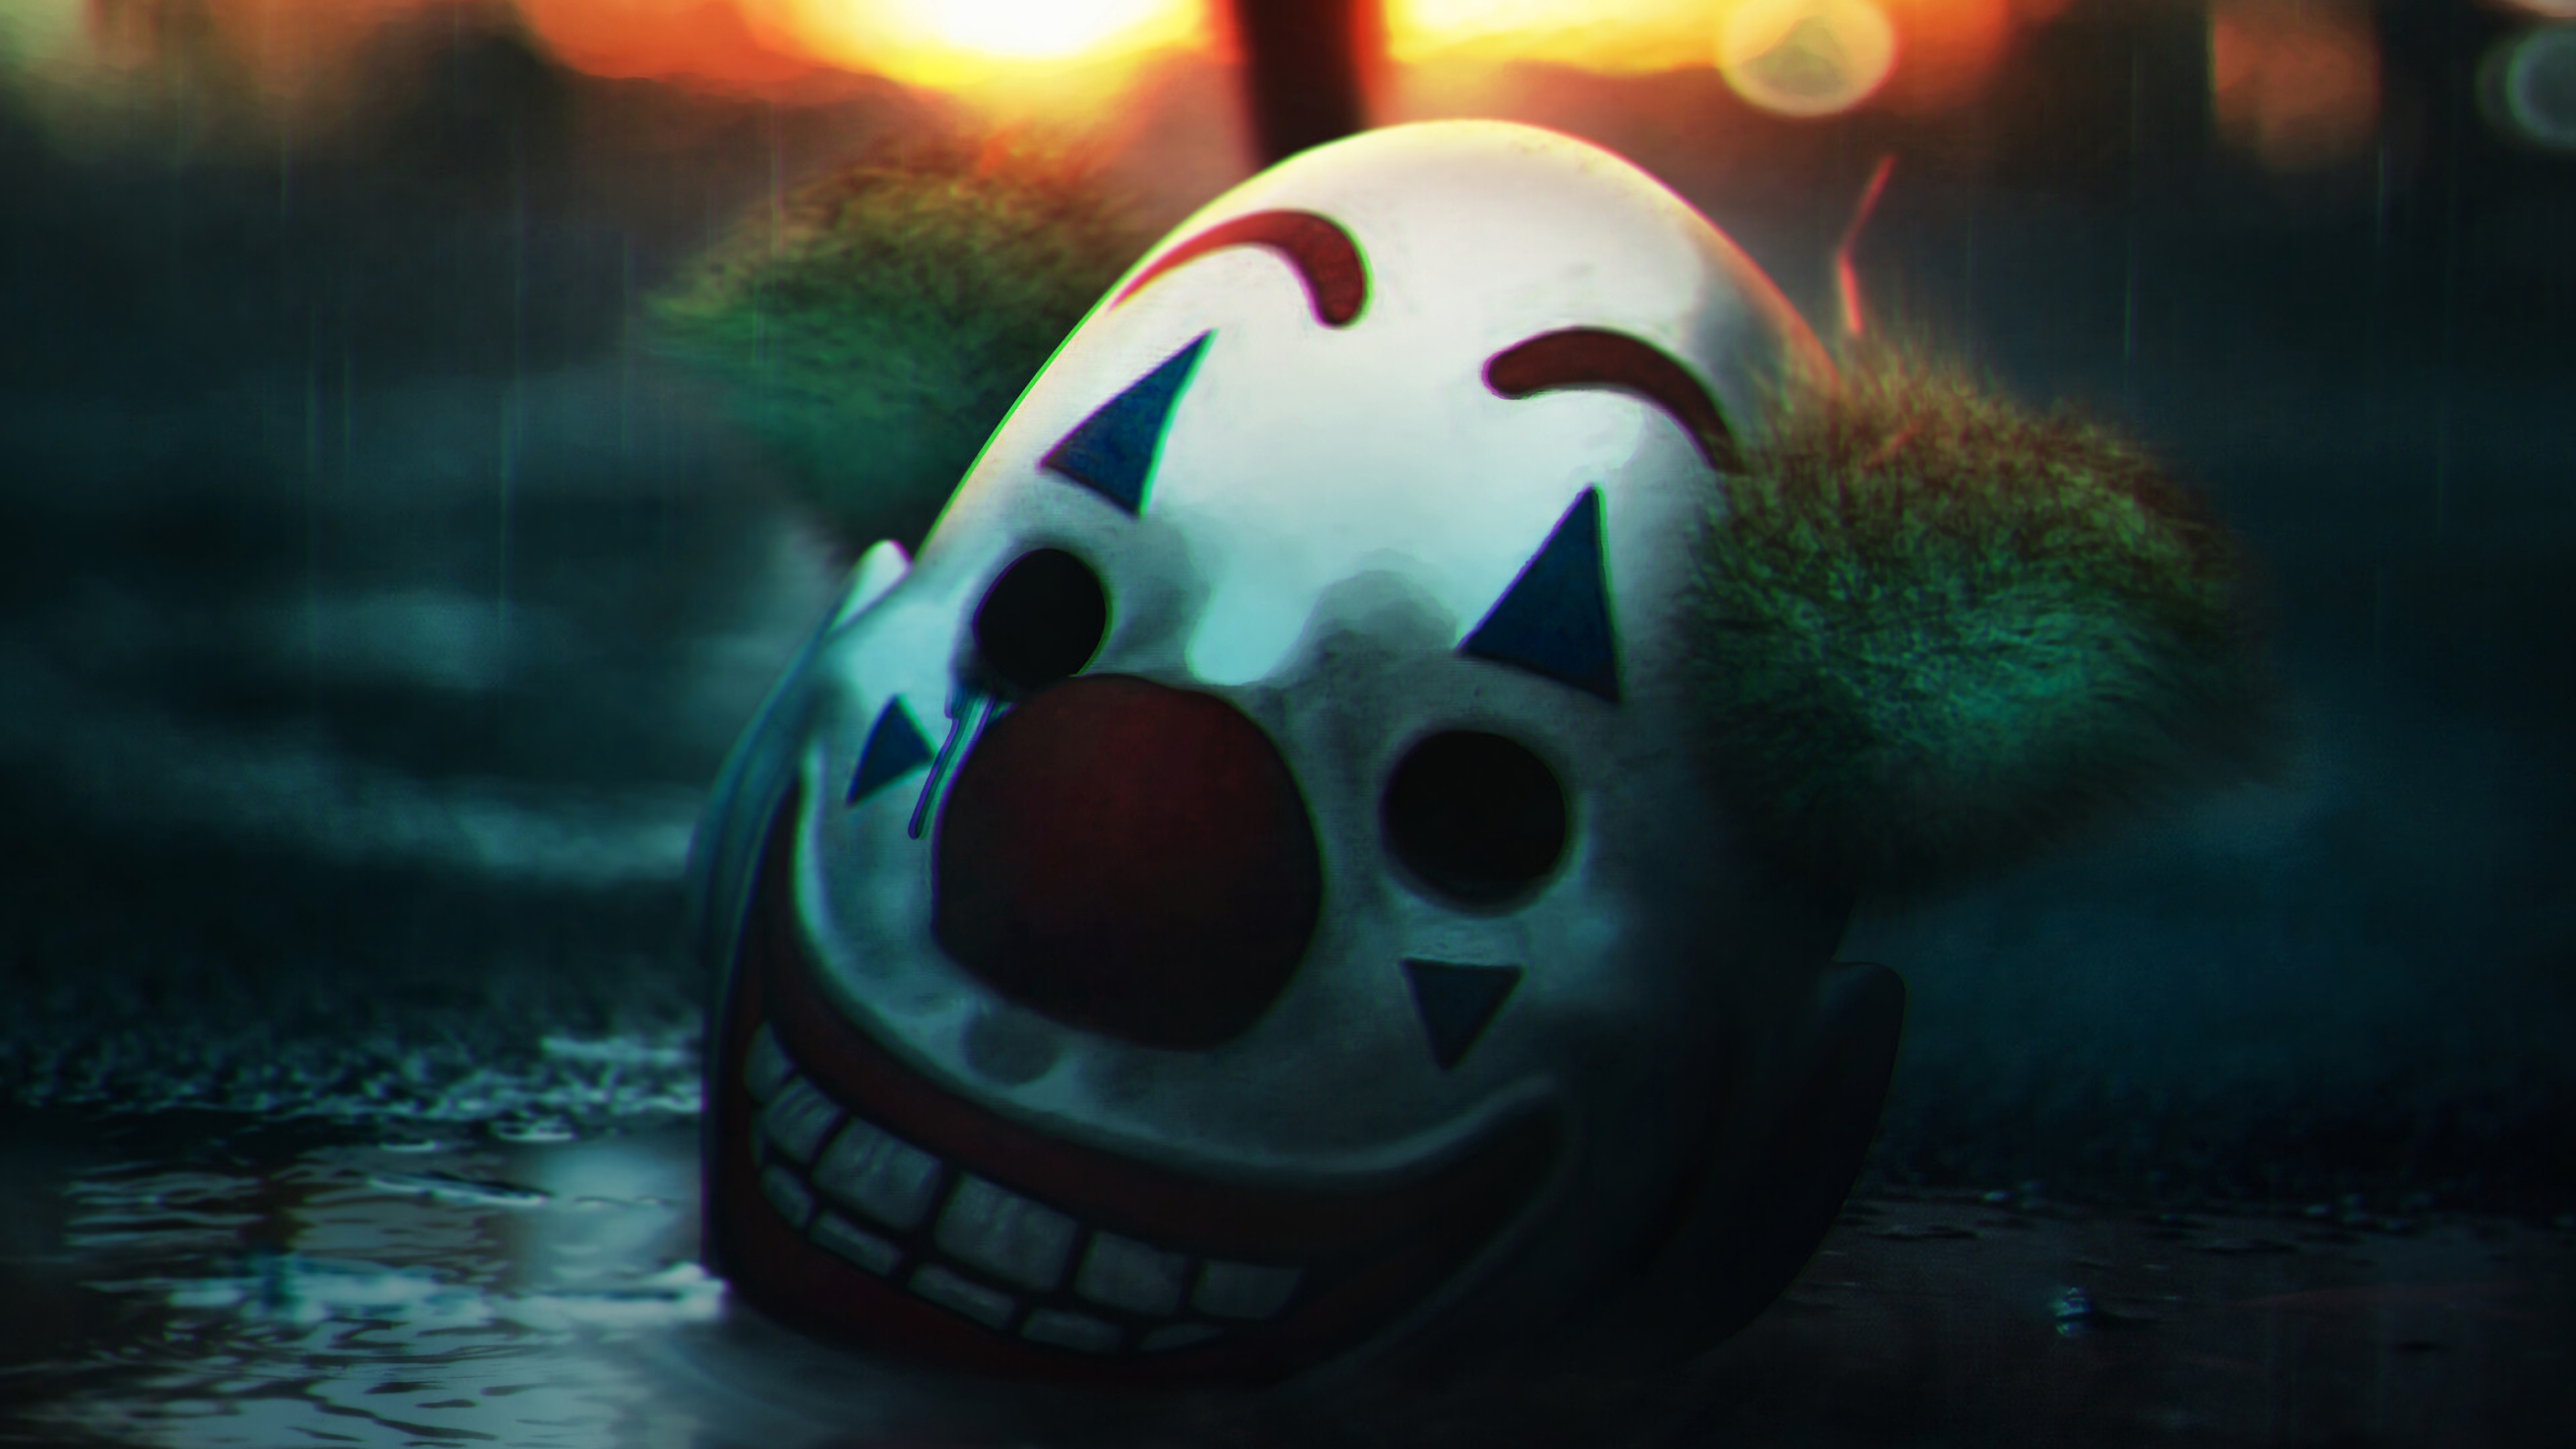 Creepy Joker Smile Wallpaper, HD Artist 4K Wallpapers ...